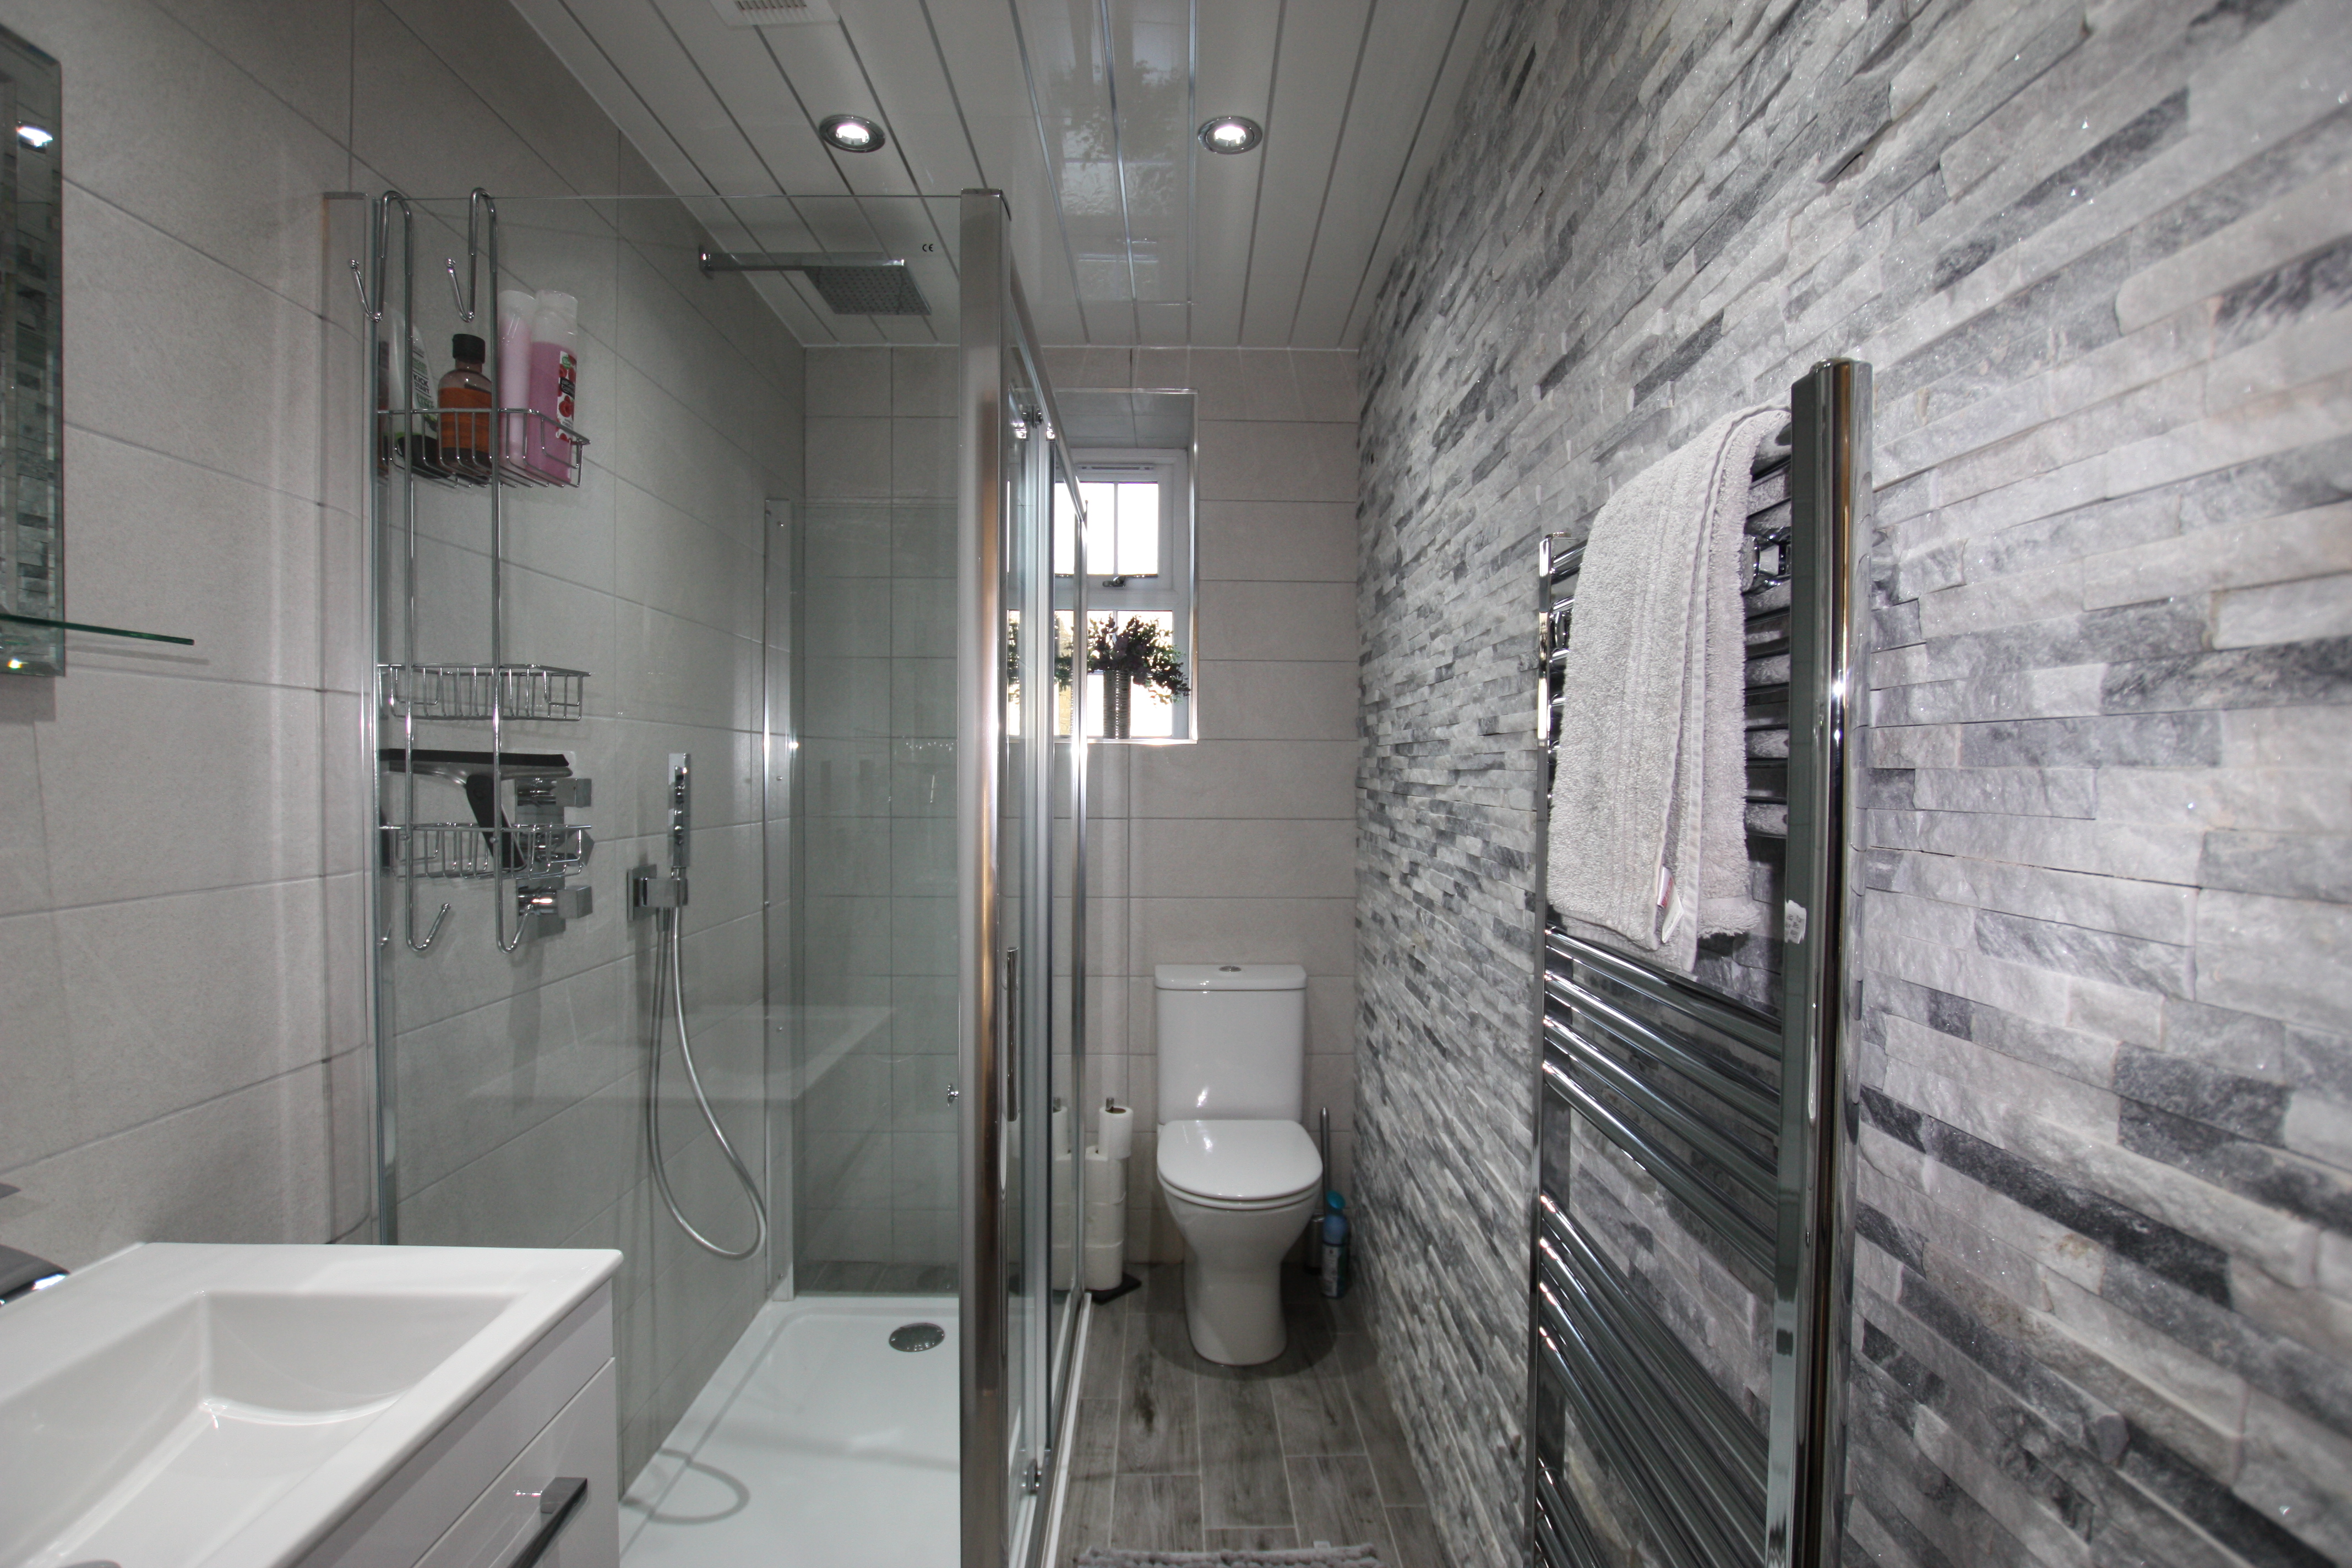 Luxurious Shower Room